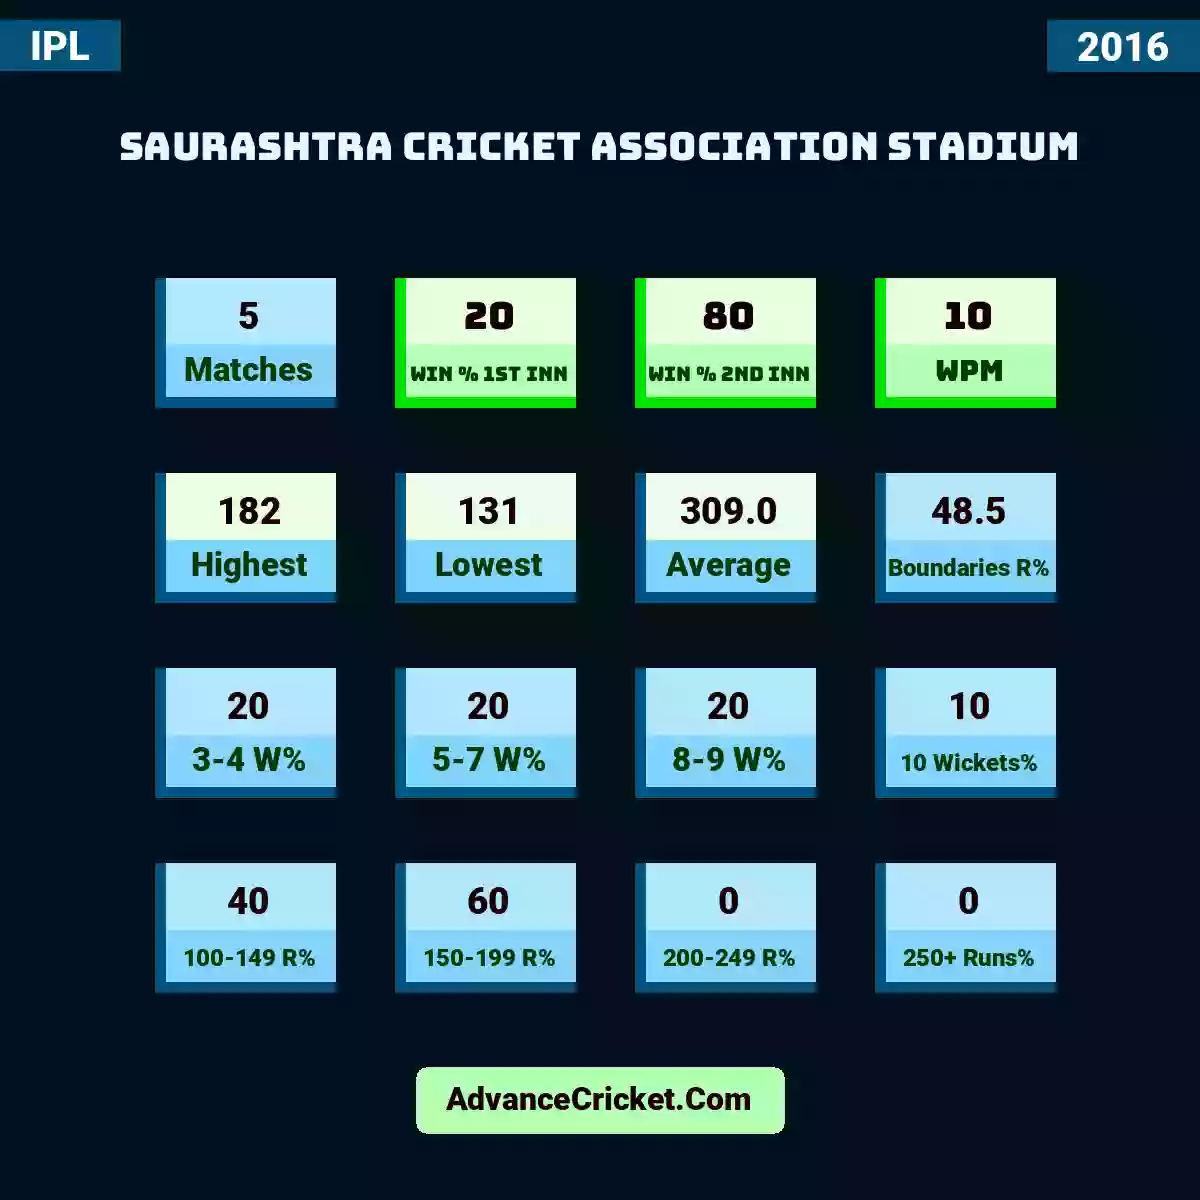 Image showing Saurashtra Cricket Association Stadium with Matches: 5, Win % 1st Inn: 20, Win % 2nd Inn: 80, WPM: 10, Highest: 182, Lowest: 131, Average: 309.0, Boundaries R%: 48.5, 3-4 W%: 20, 5-7 W%: 20, 8-9 W%: 20, 10 Wickets%: 10, 100-149 R%: 40, 150-199 R%: 60, 200-249 R%: 0, 250+ Runs%: 0.